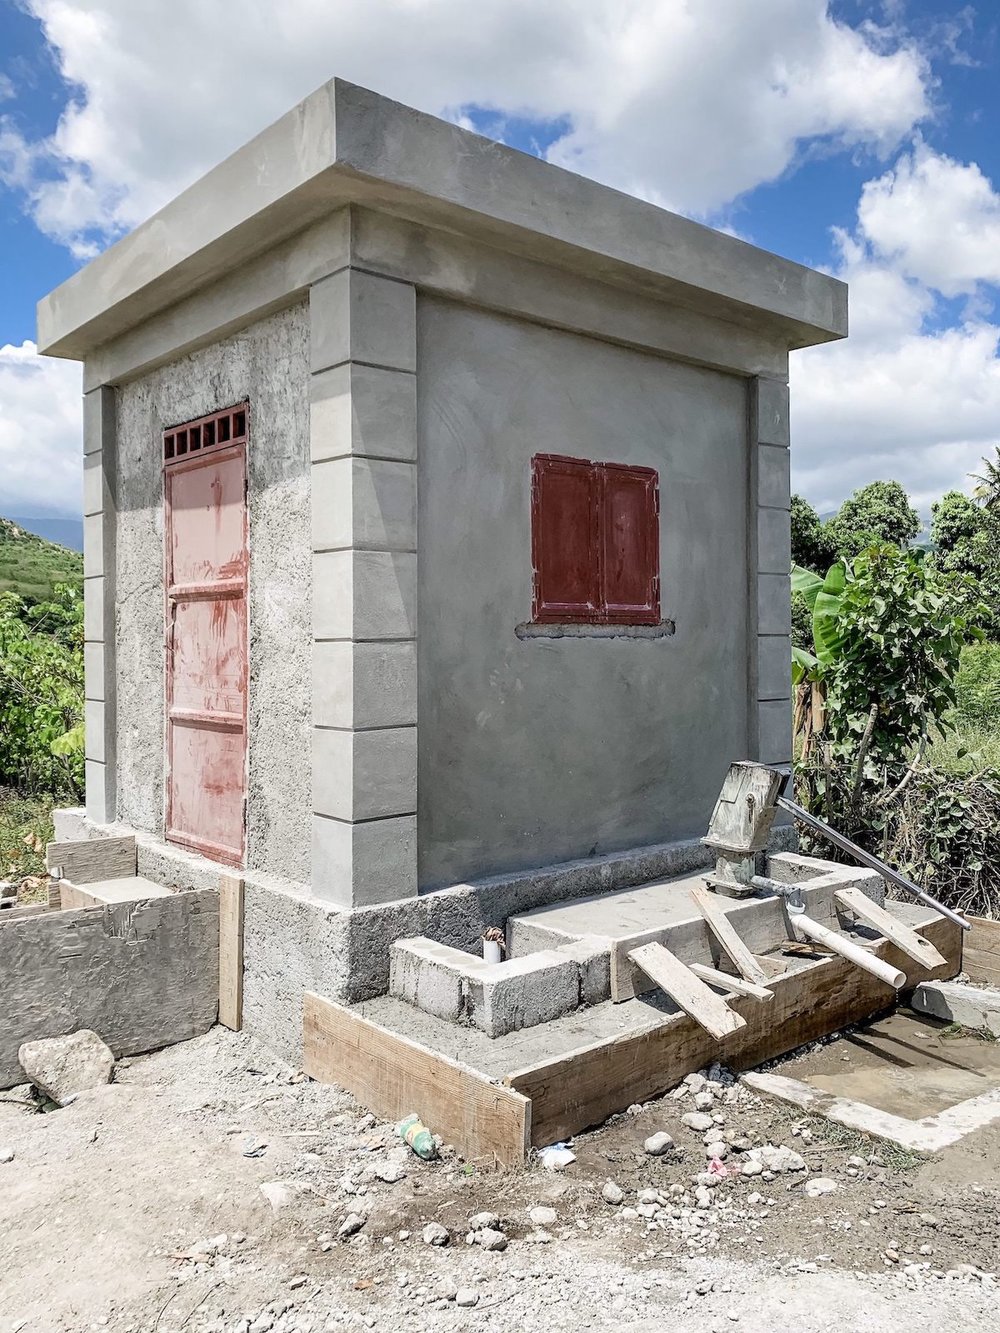 haiti water well being built